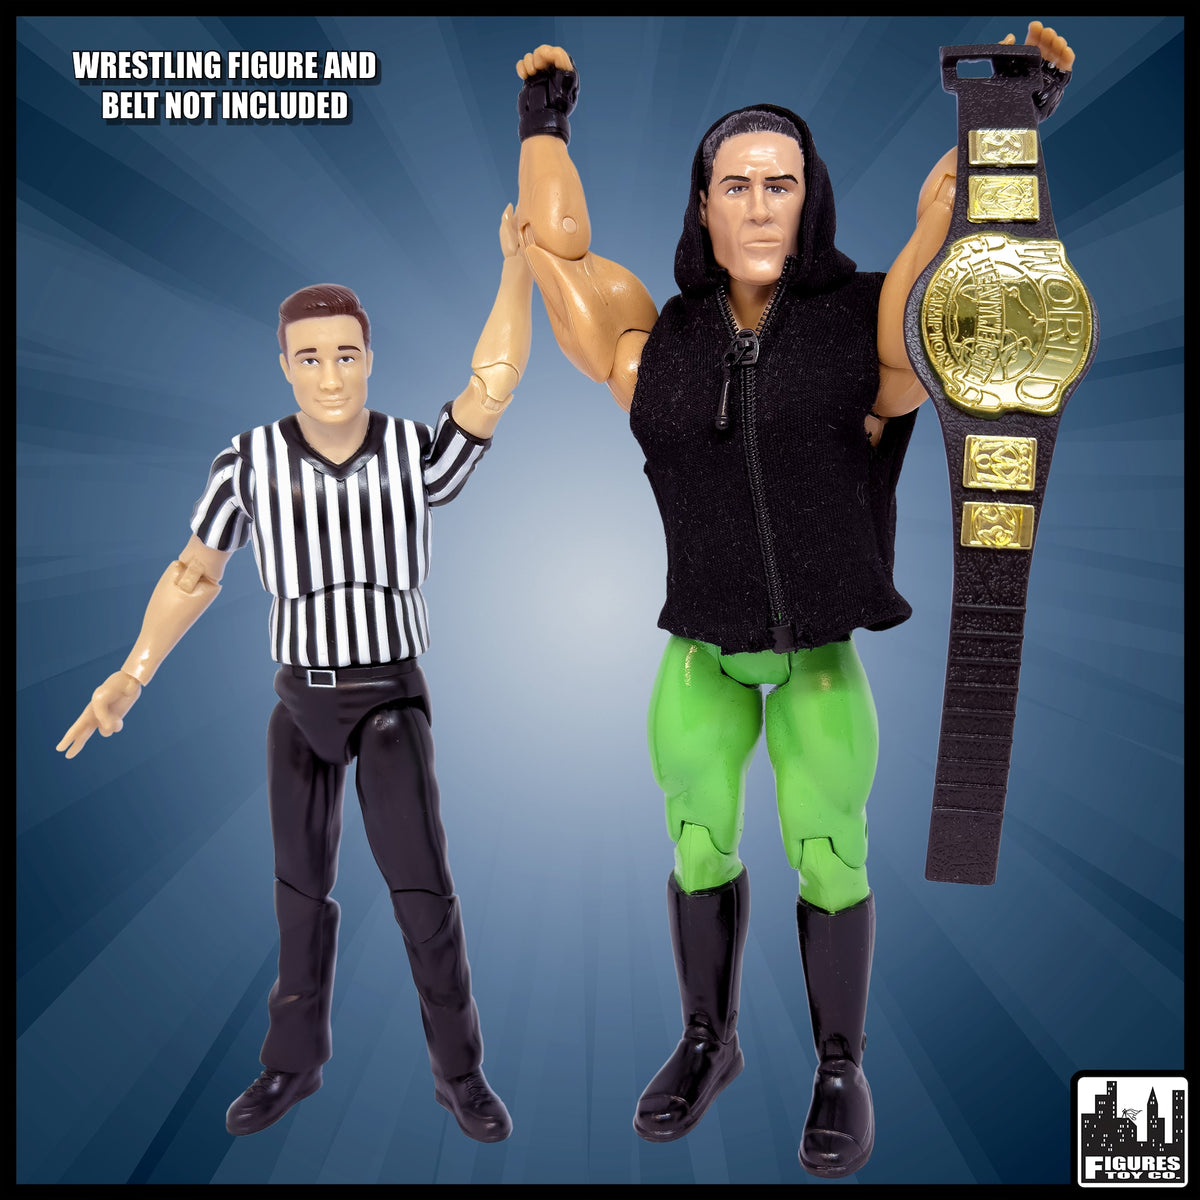 The Essentials Bundle for WWE Wrestling Action Figures